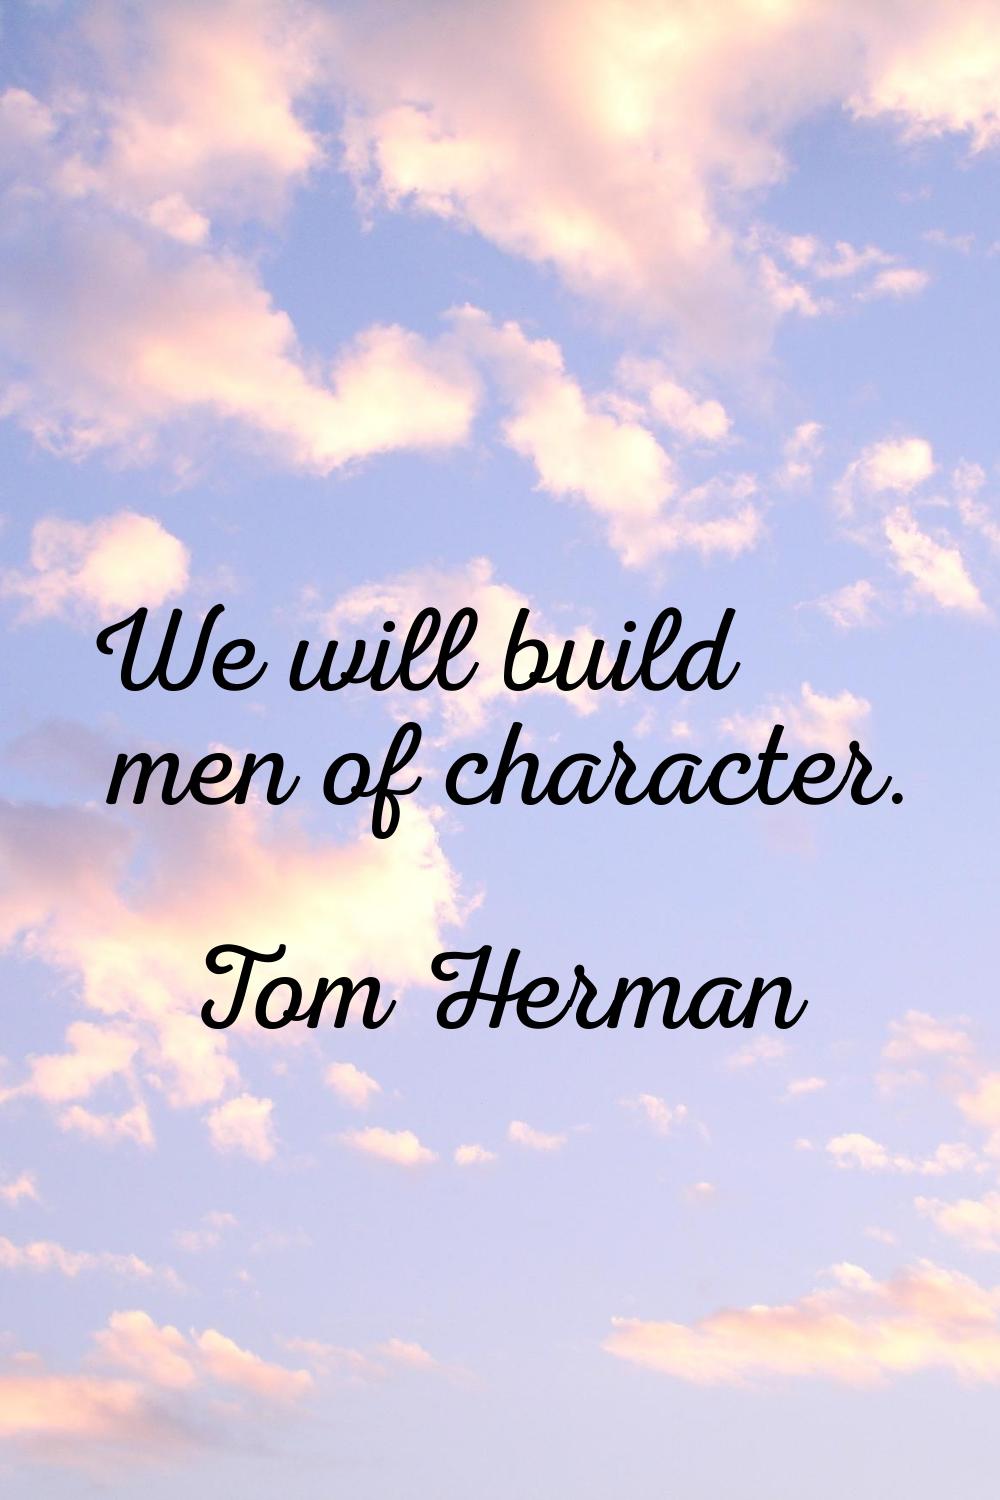 We will build men of character.